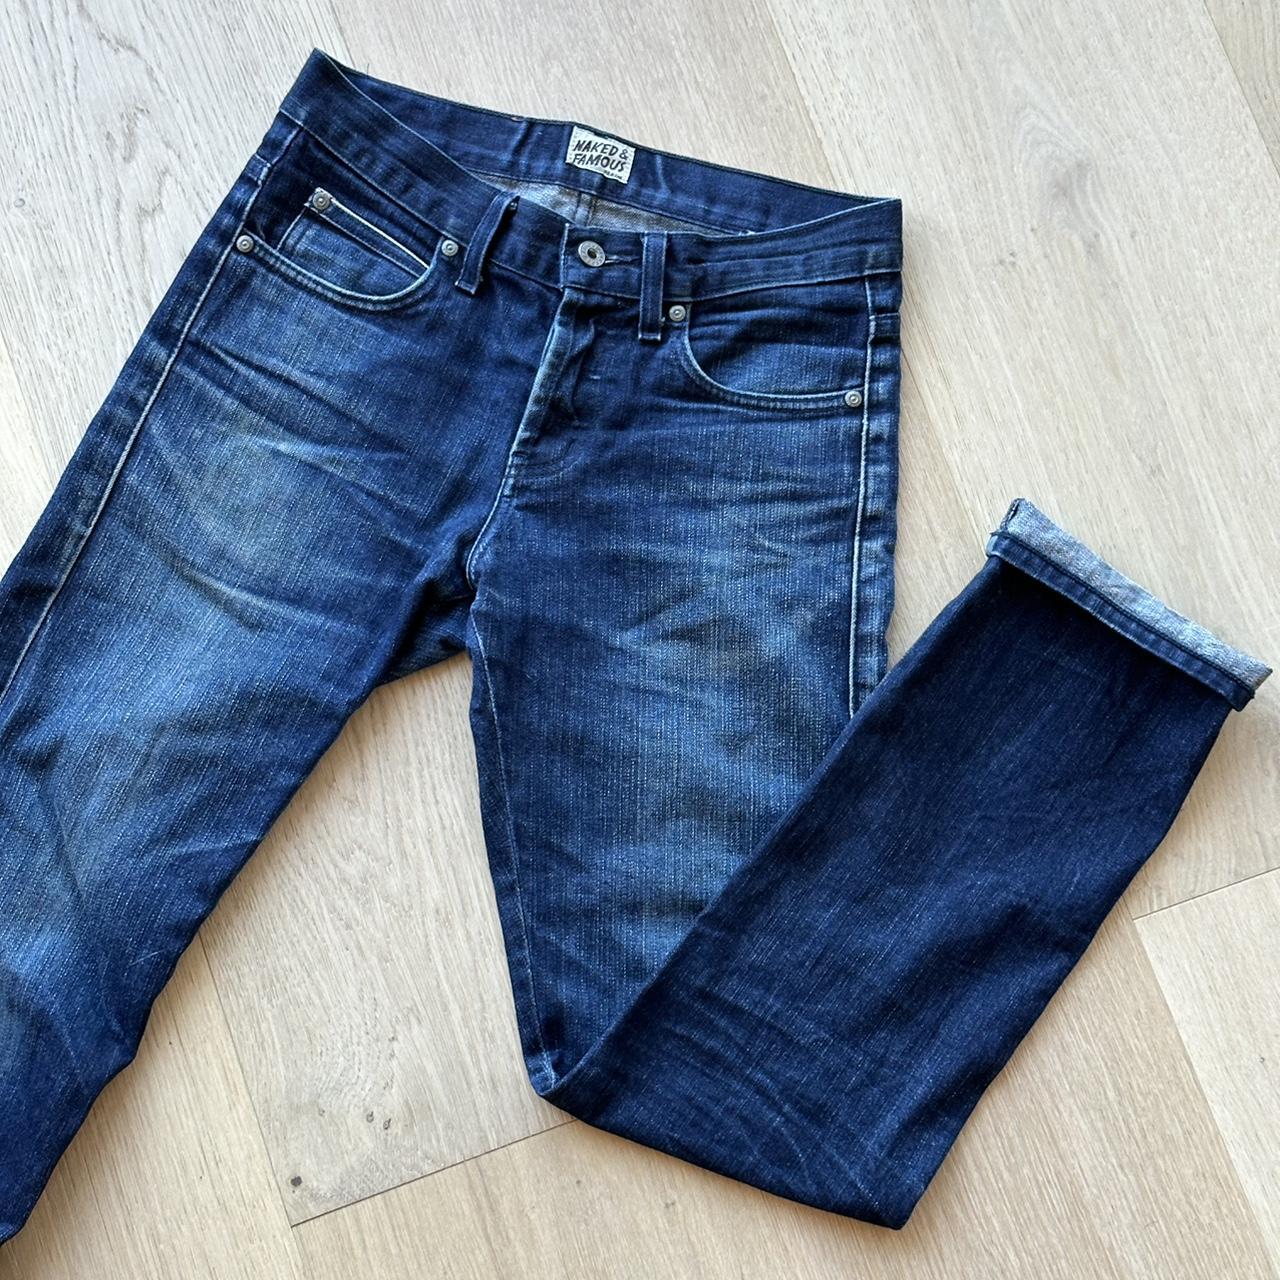 Naked and Famous Vintage Dark Wash Denim Jeans with... - Depop